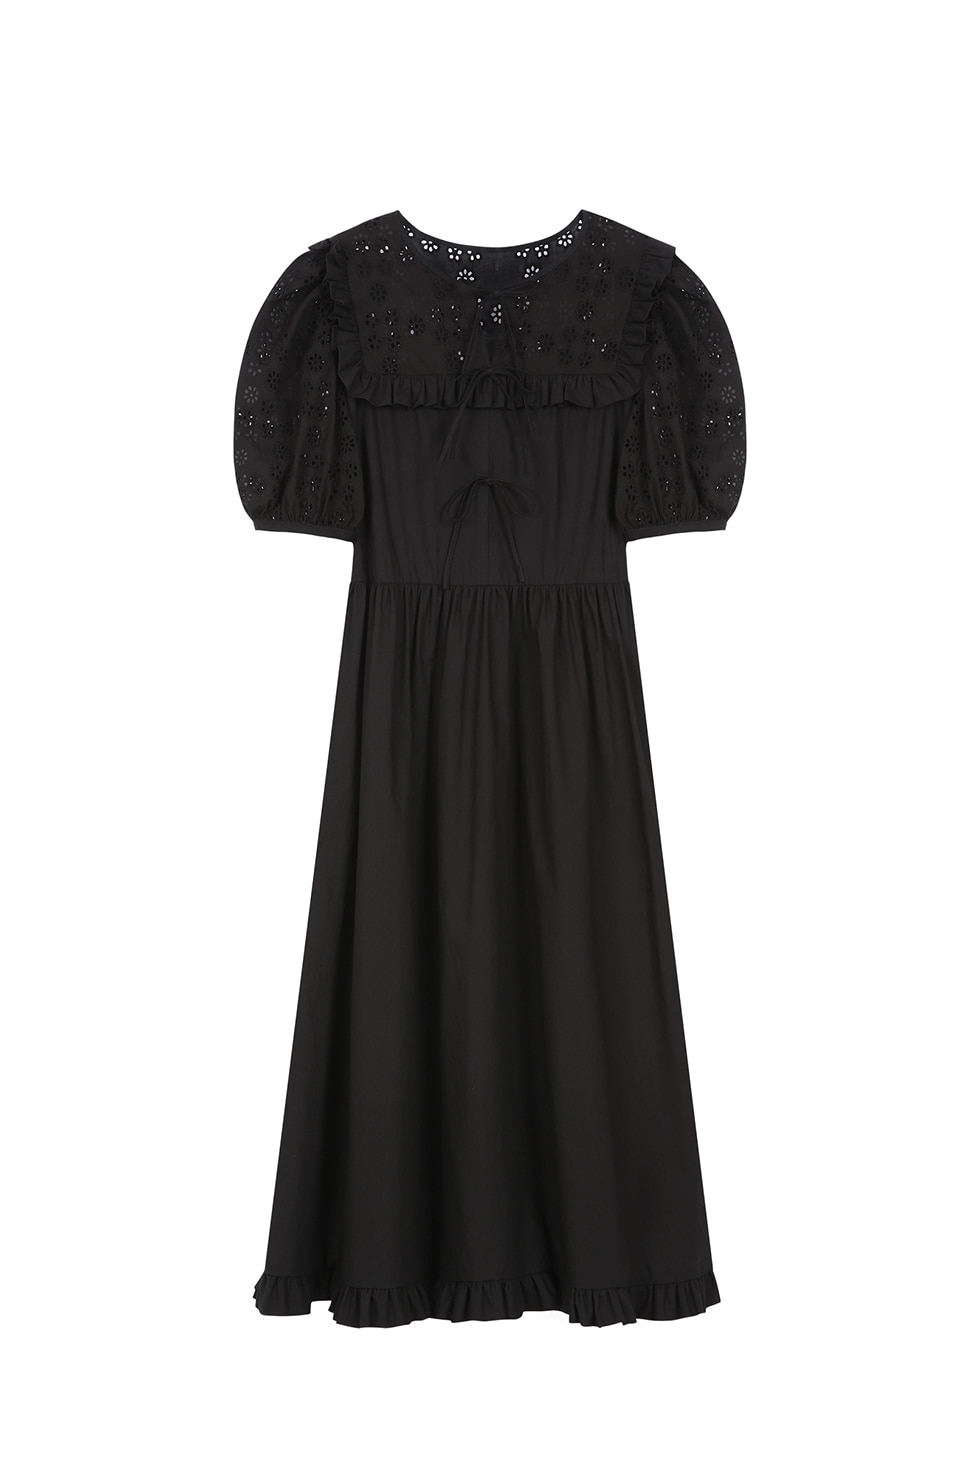 COTTON BROIDERY DRESS - BLACK